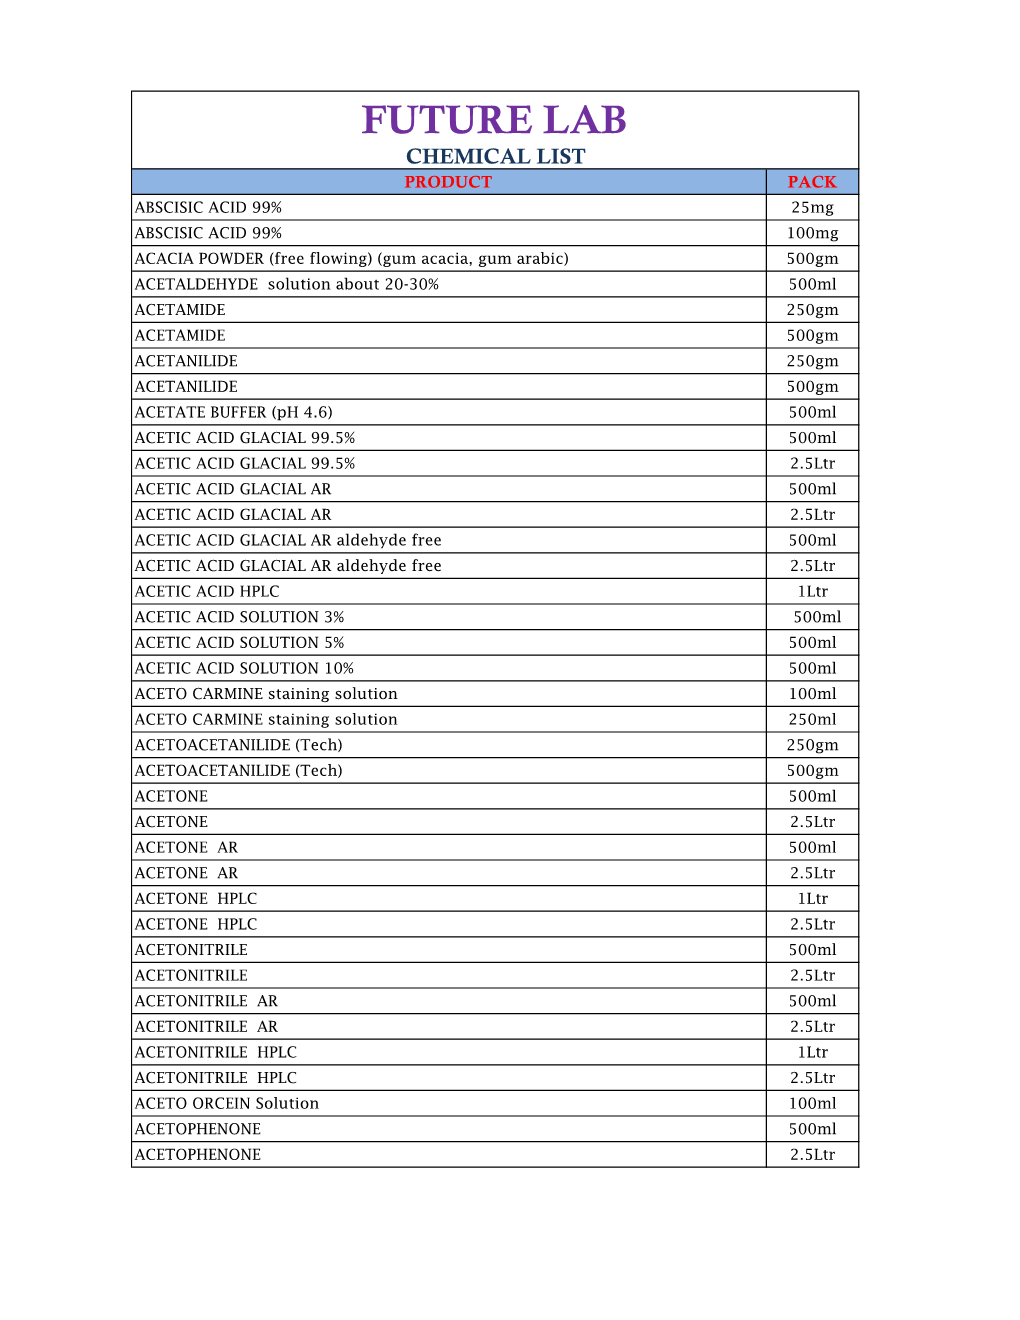 Qualikems Price List 2014-15